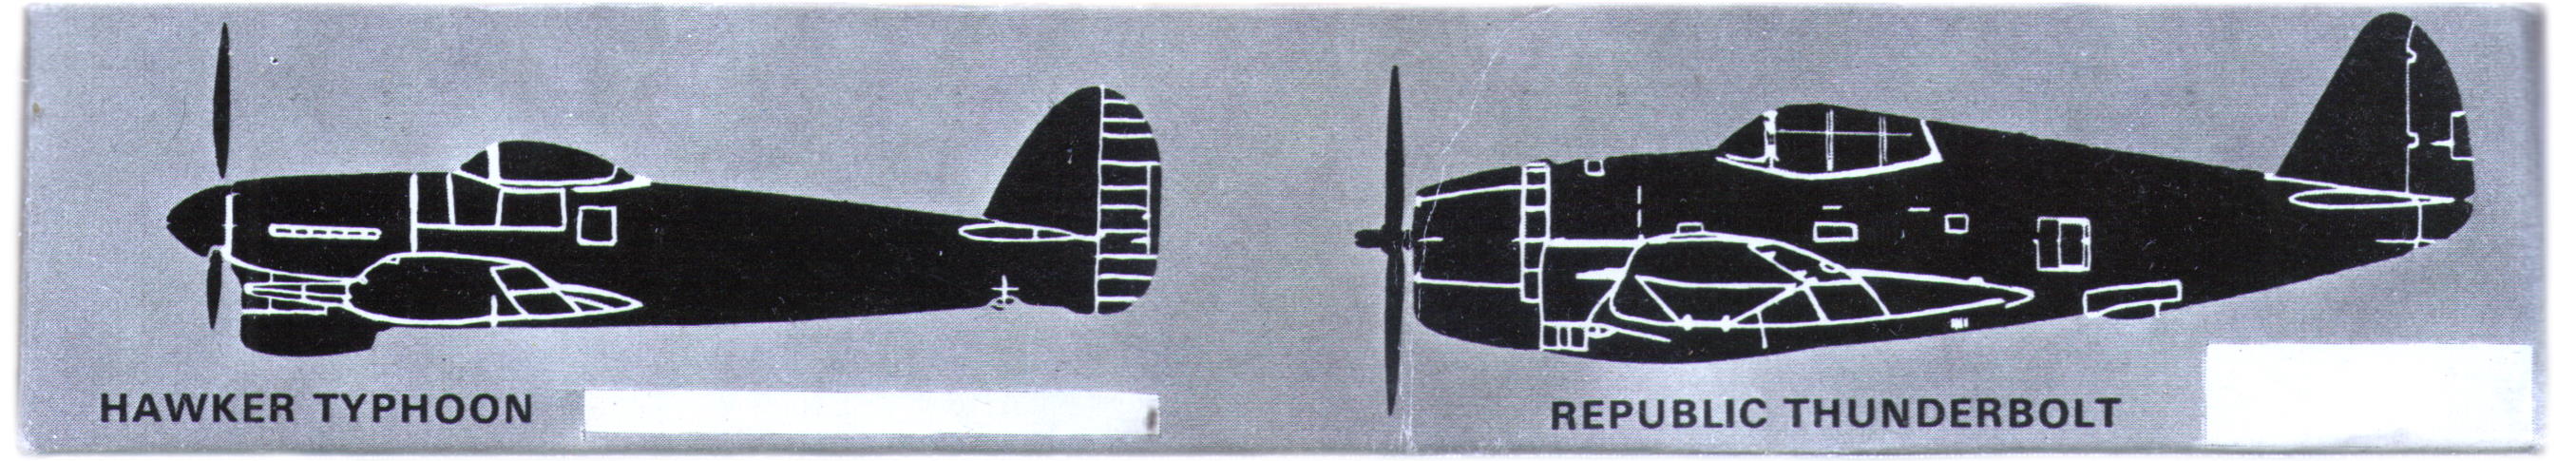 Другие модели Чёрной серии FROG F391 Curtiss P-40E Warhawk (Kittyhawk IA), Black series, Rovex Industries Ltd, 1966-67